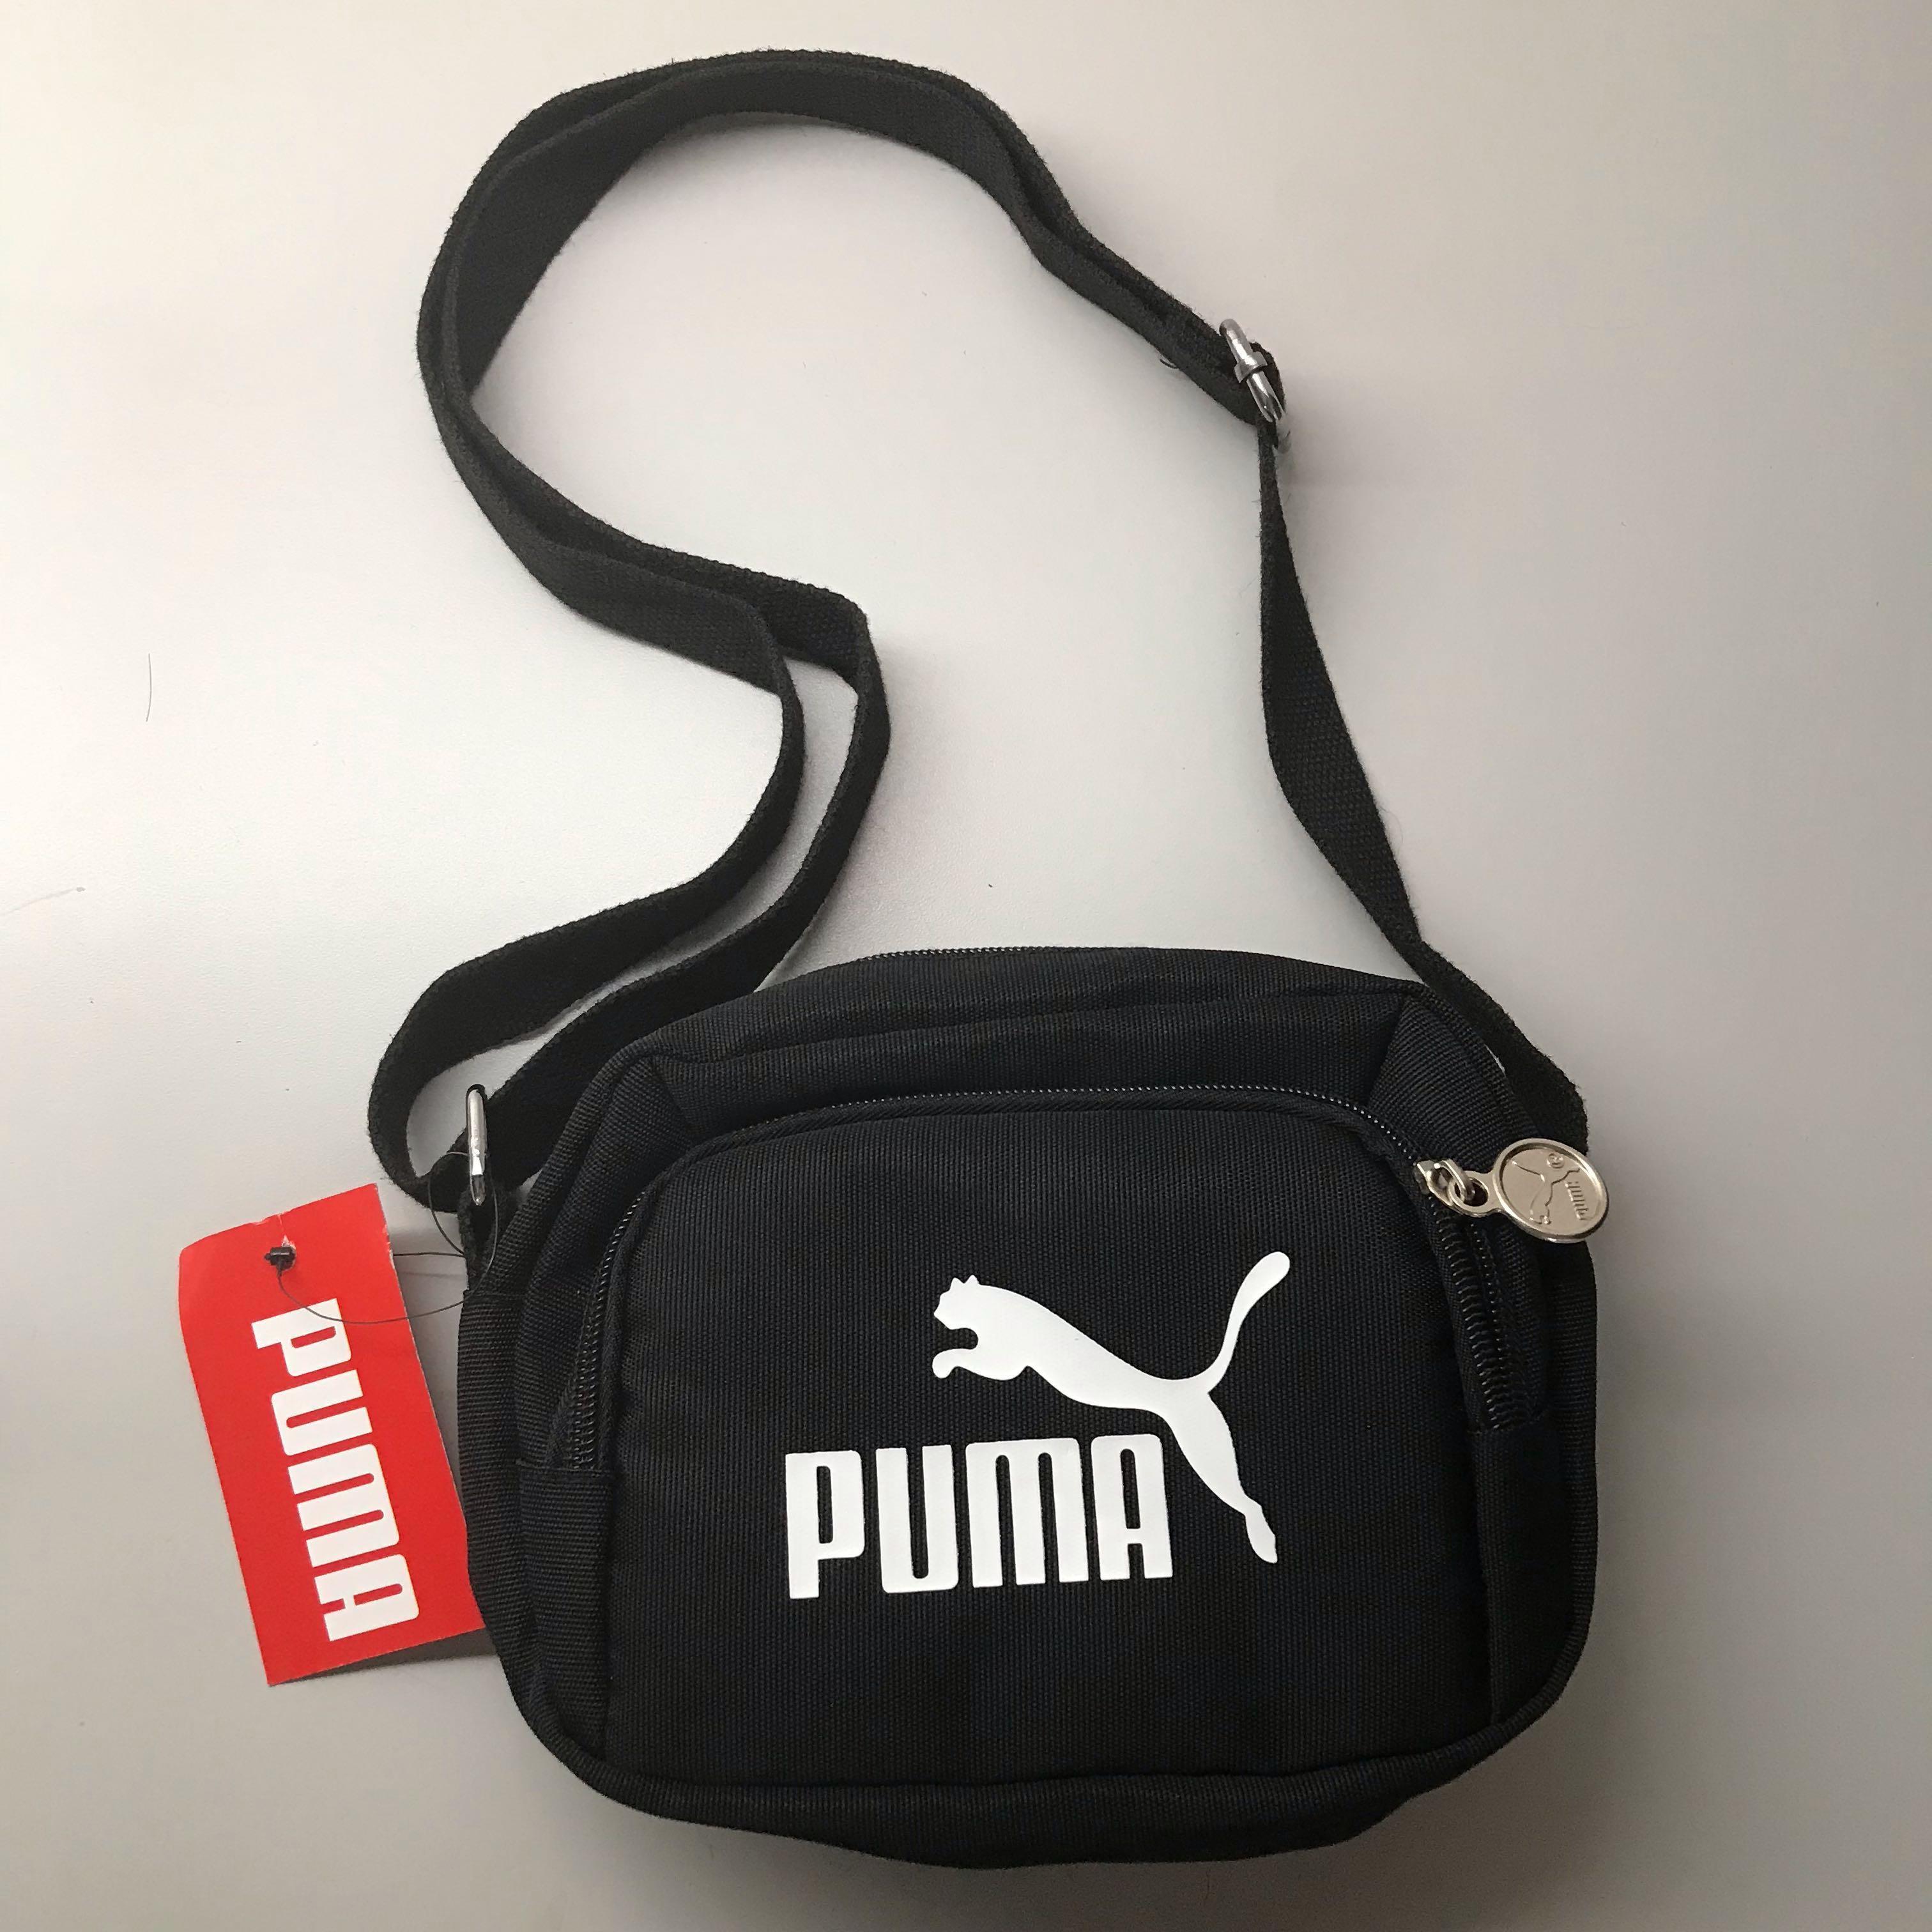 puma sling bags mens